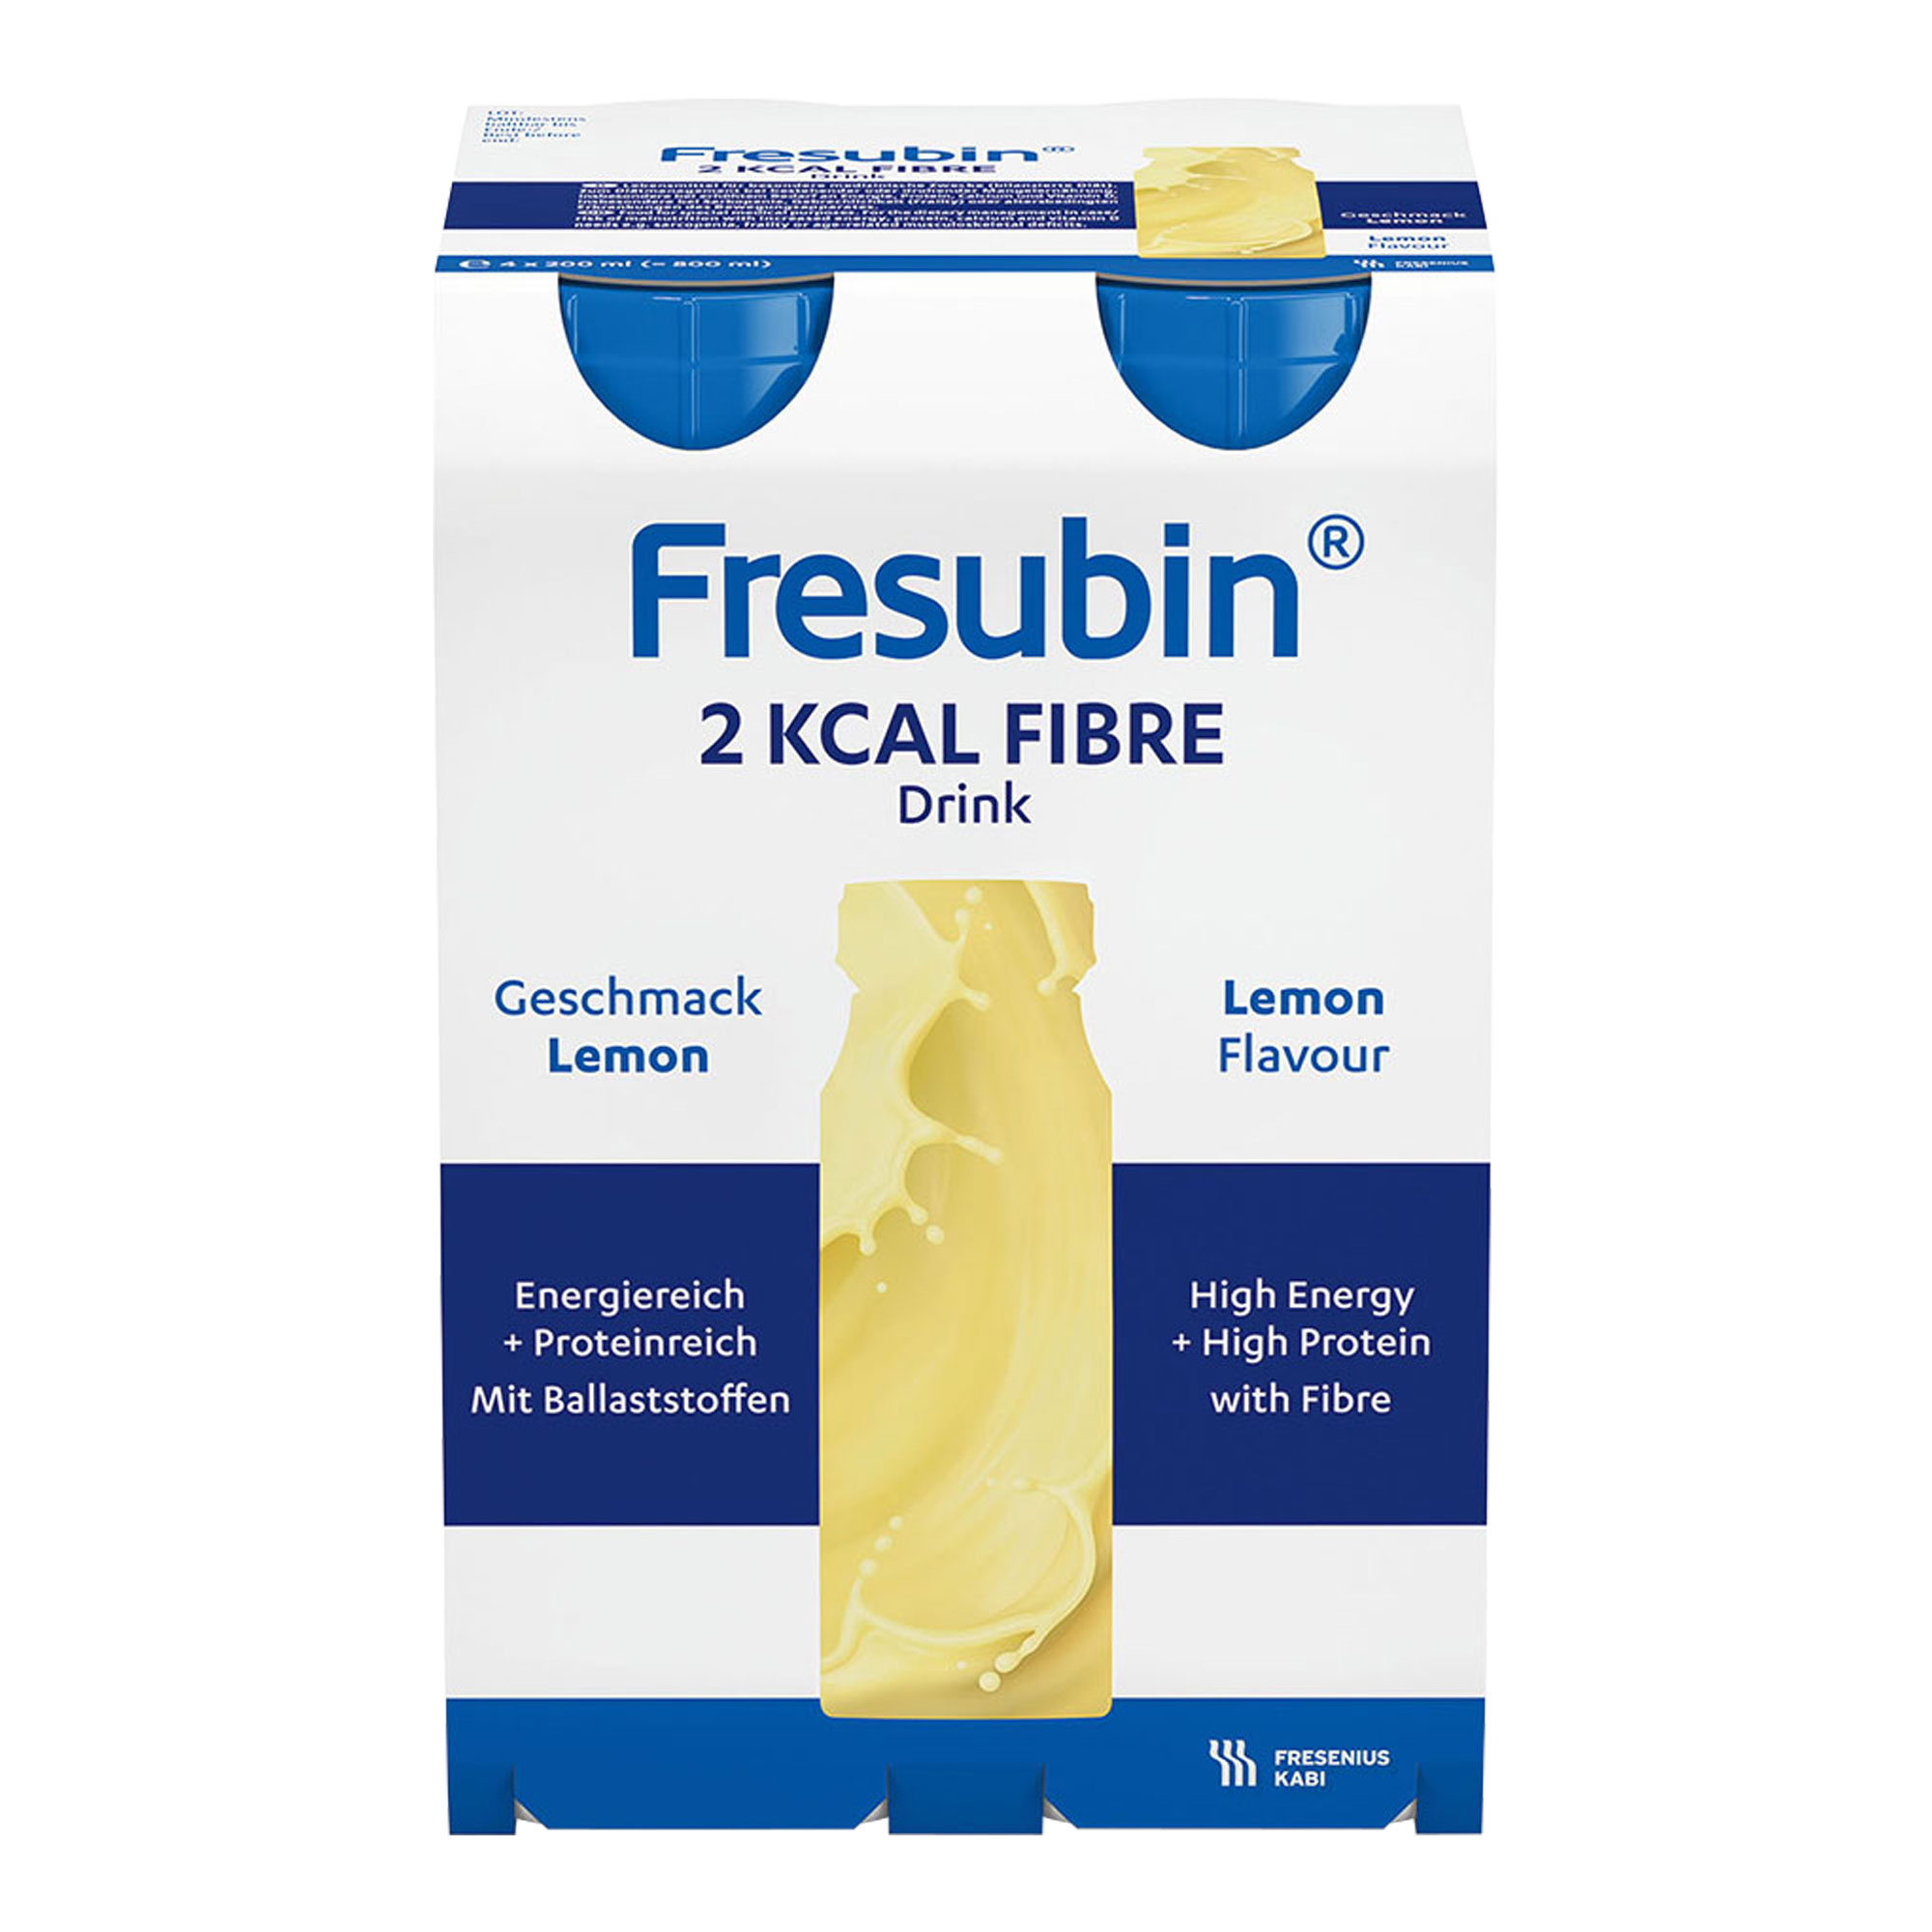 Fresubin 2 kcal fibre DRINK Lemon